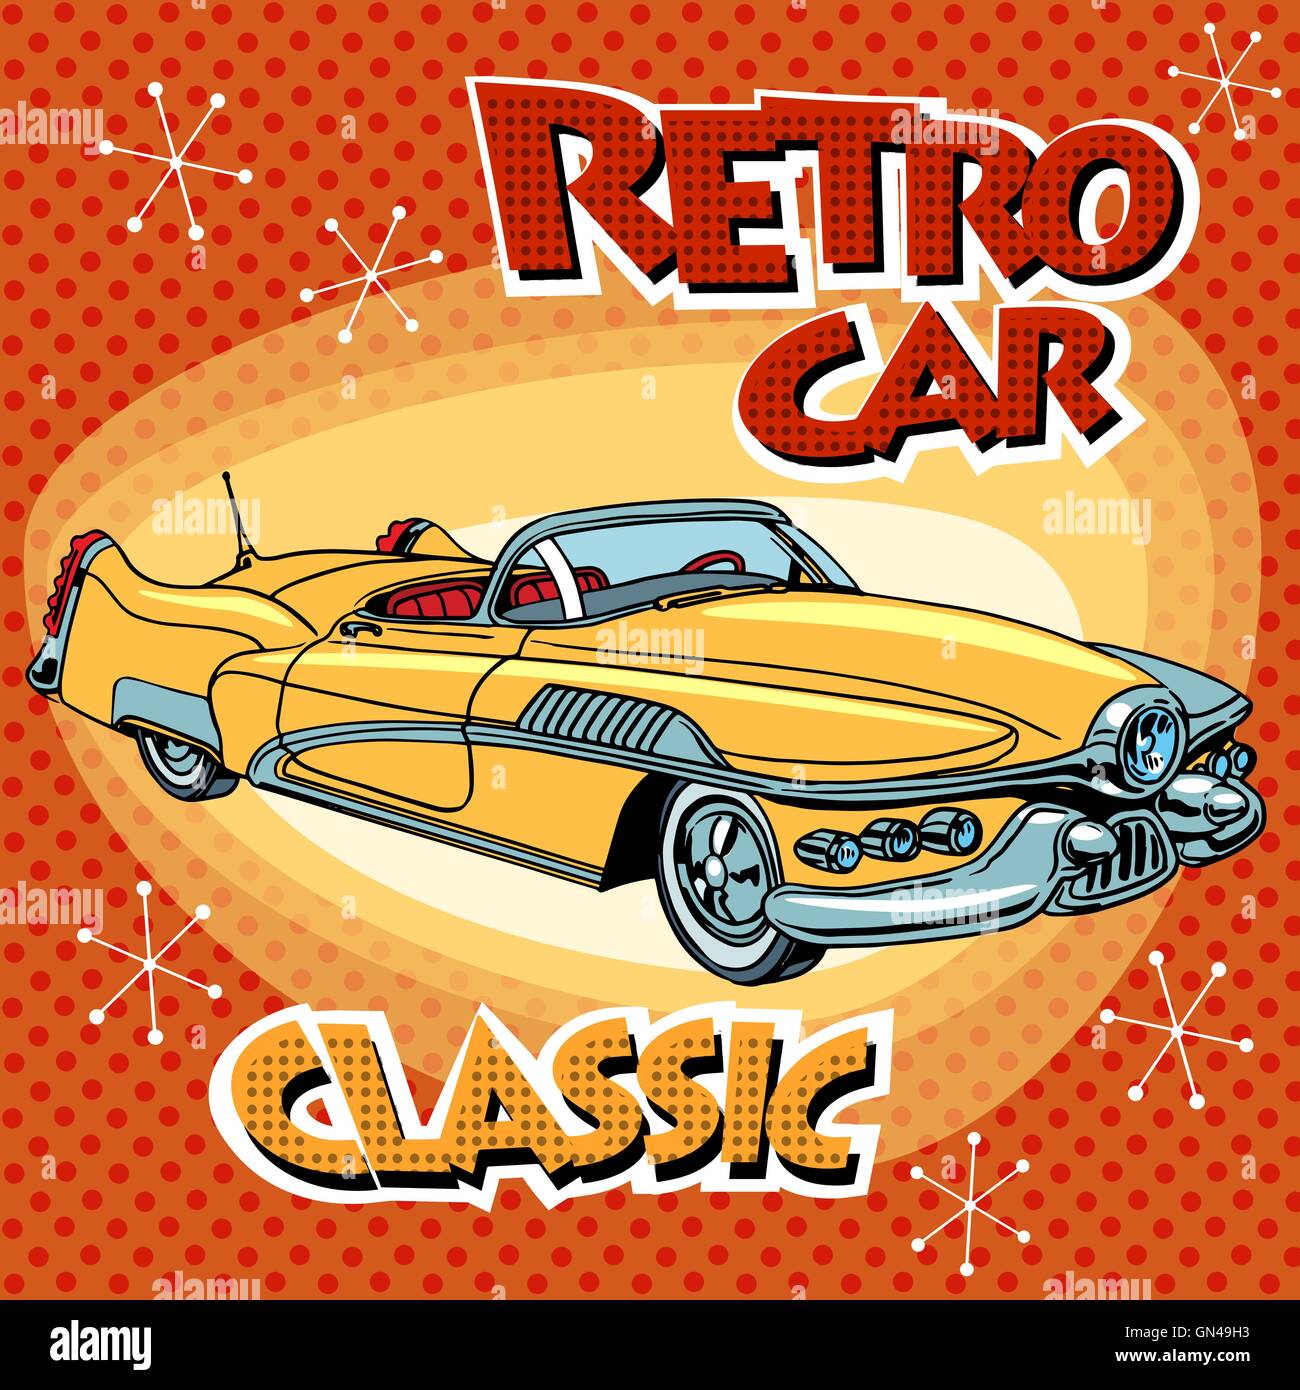 Retro car classic abstract model Stock Vector